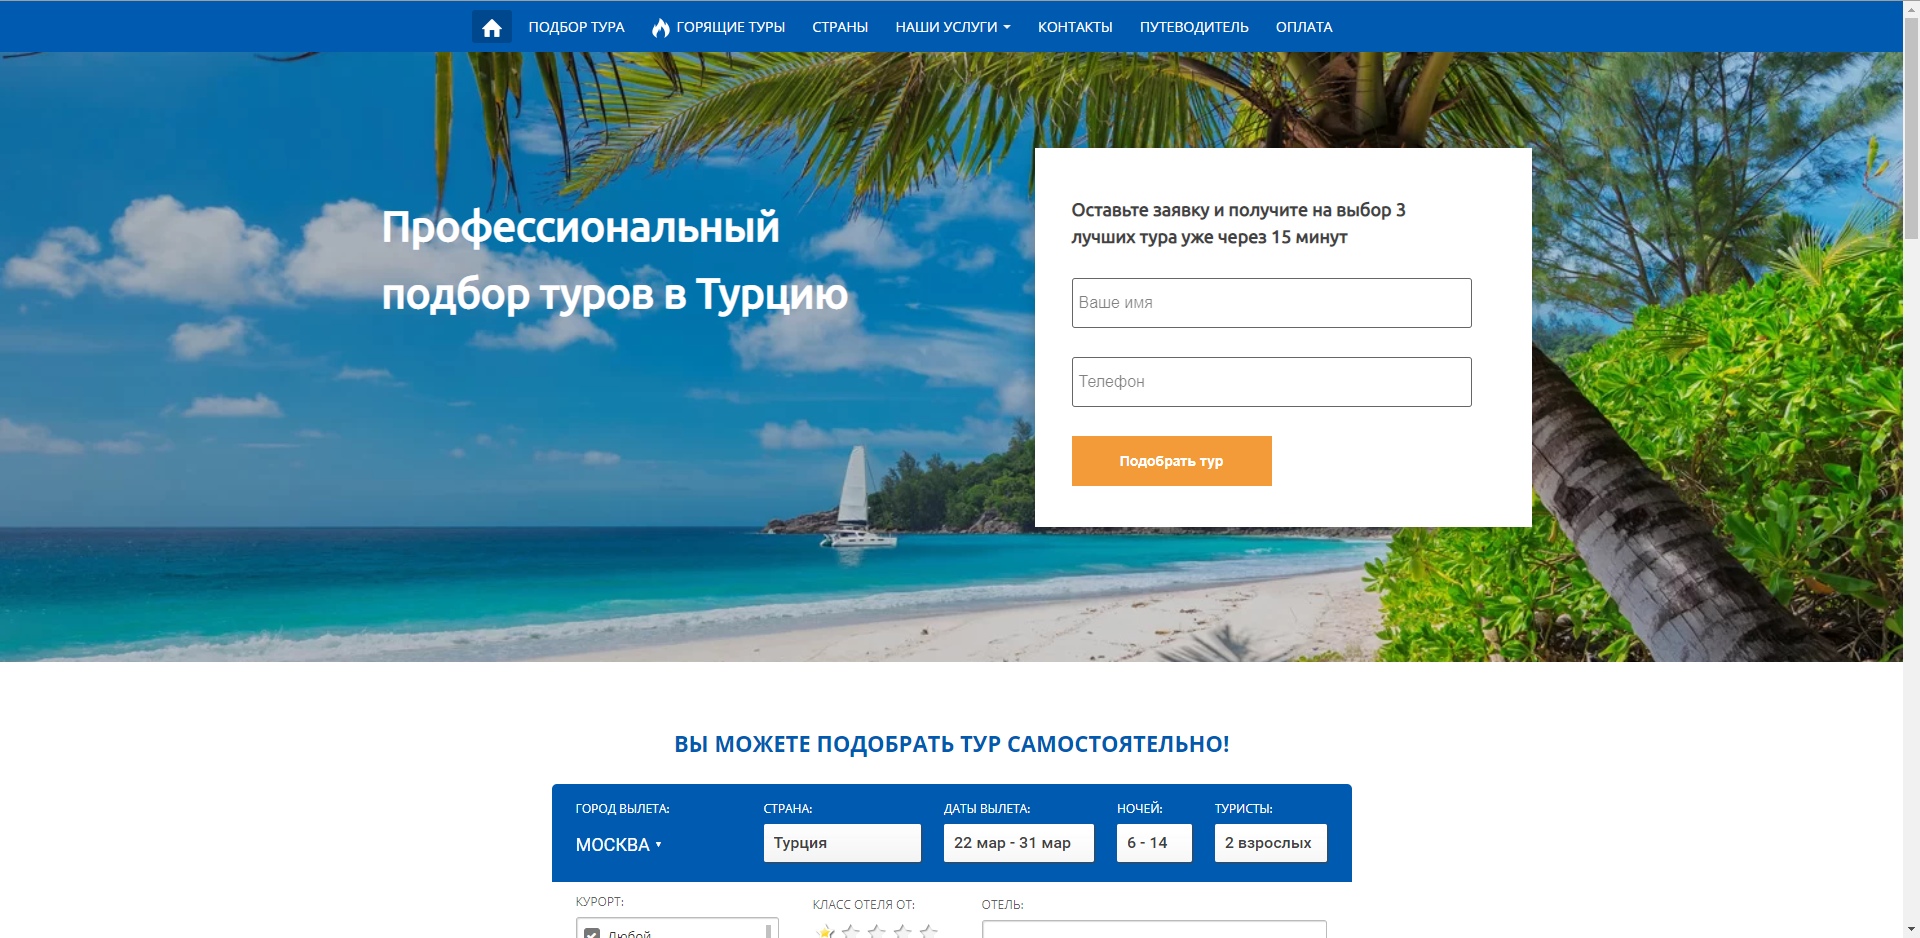 Яндекс.Директ в туризме – пример сайта 2